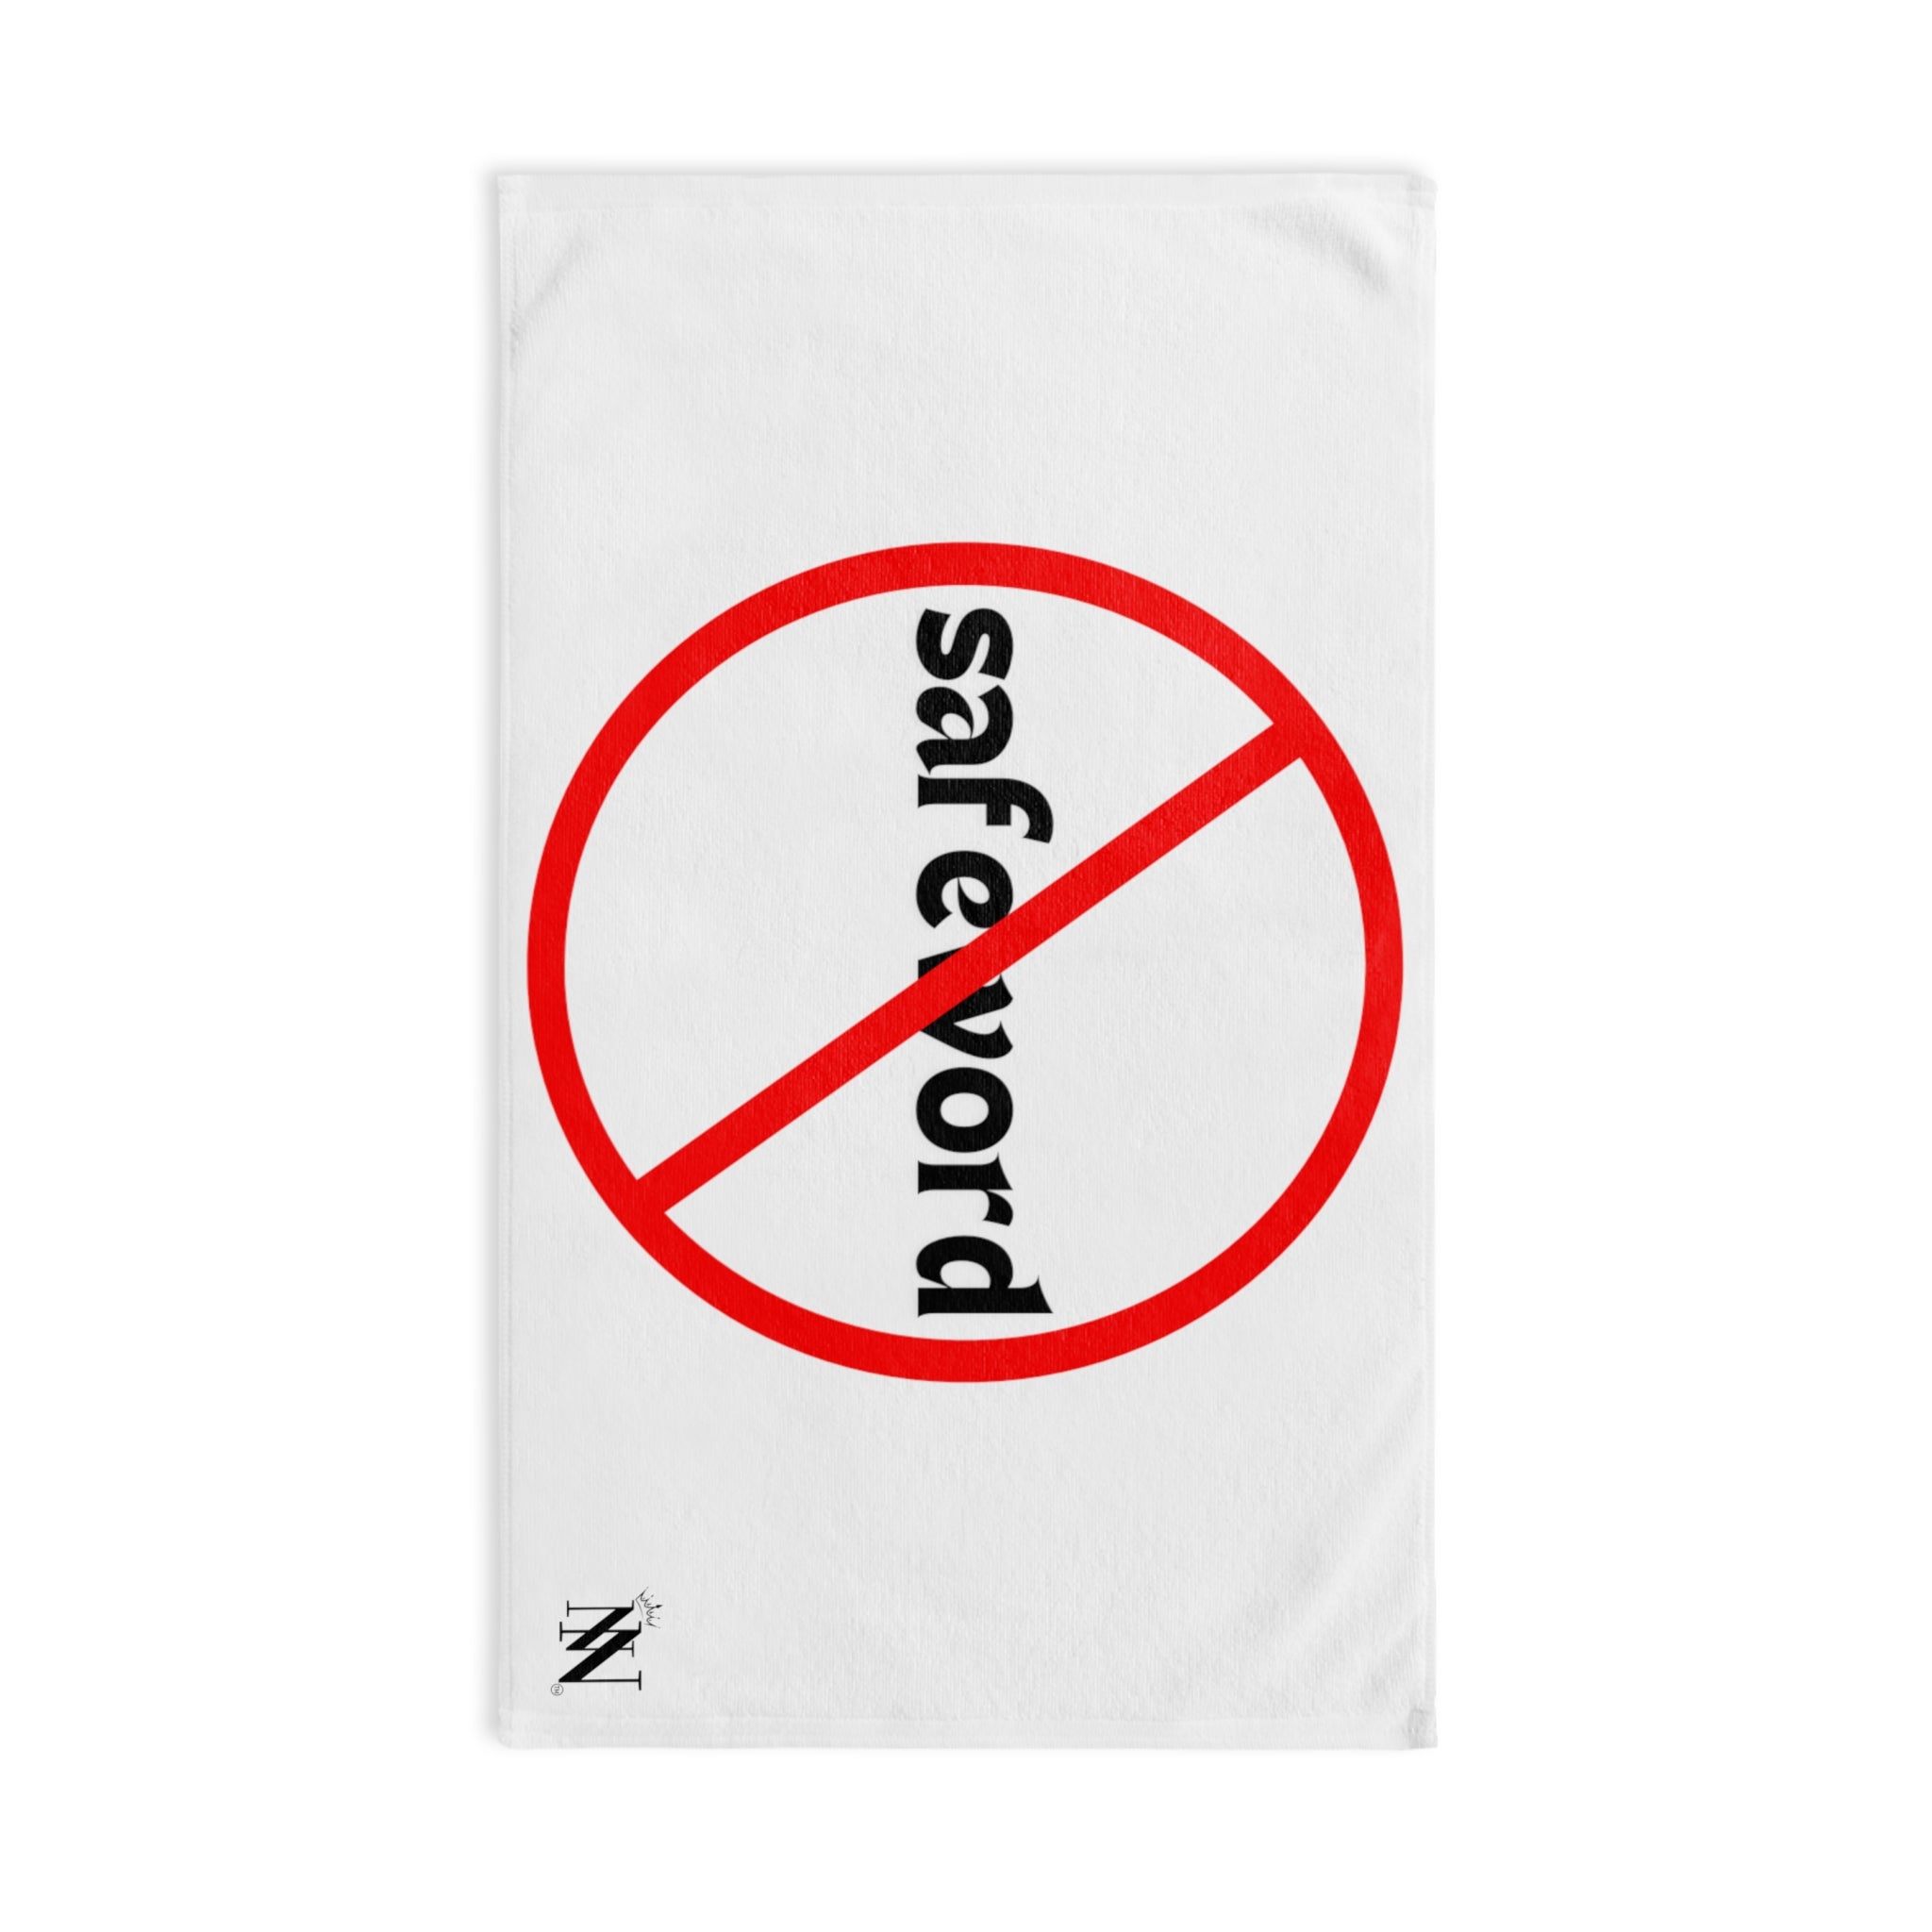 No safe word sex towel